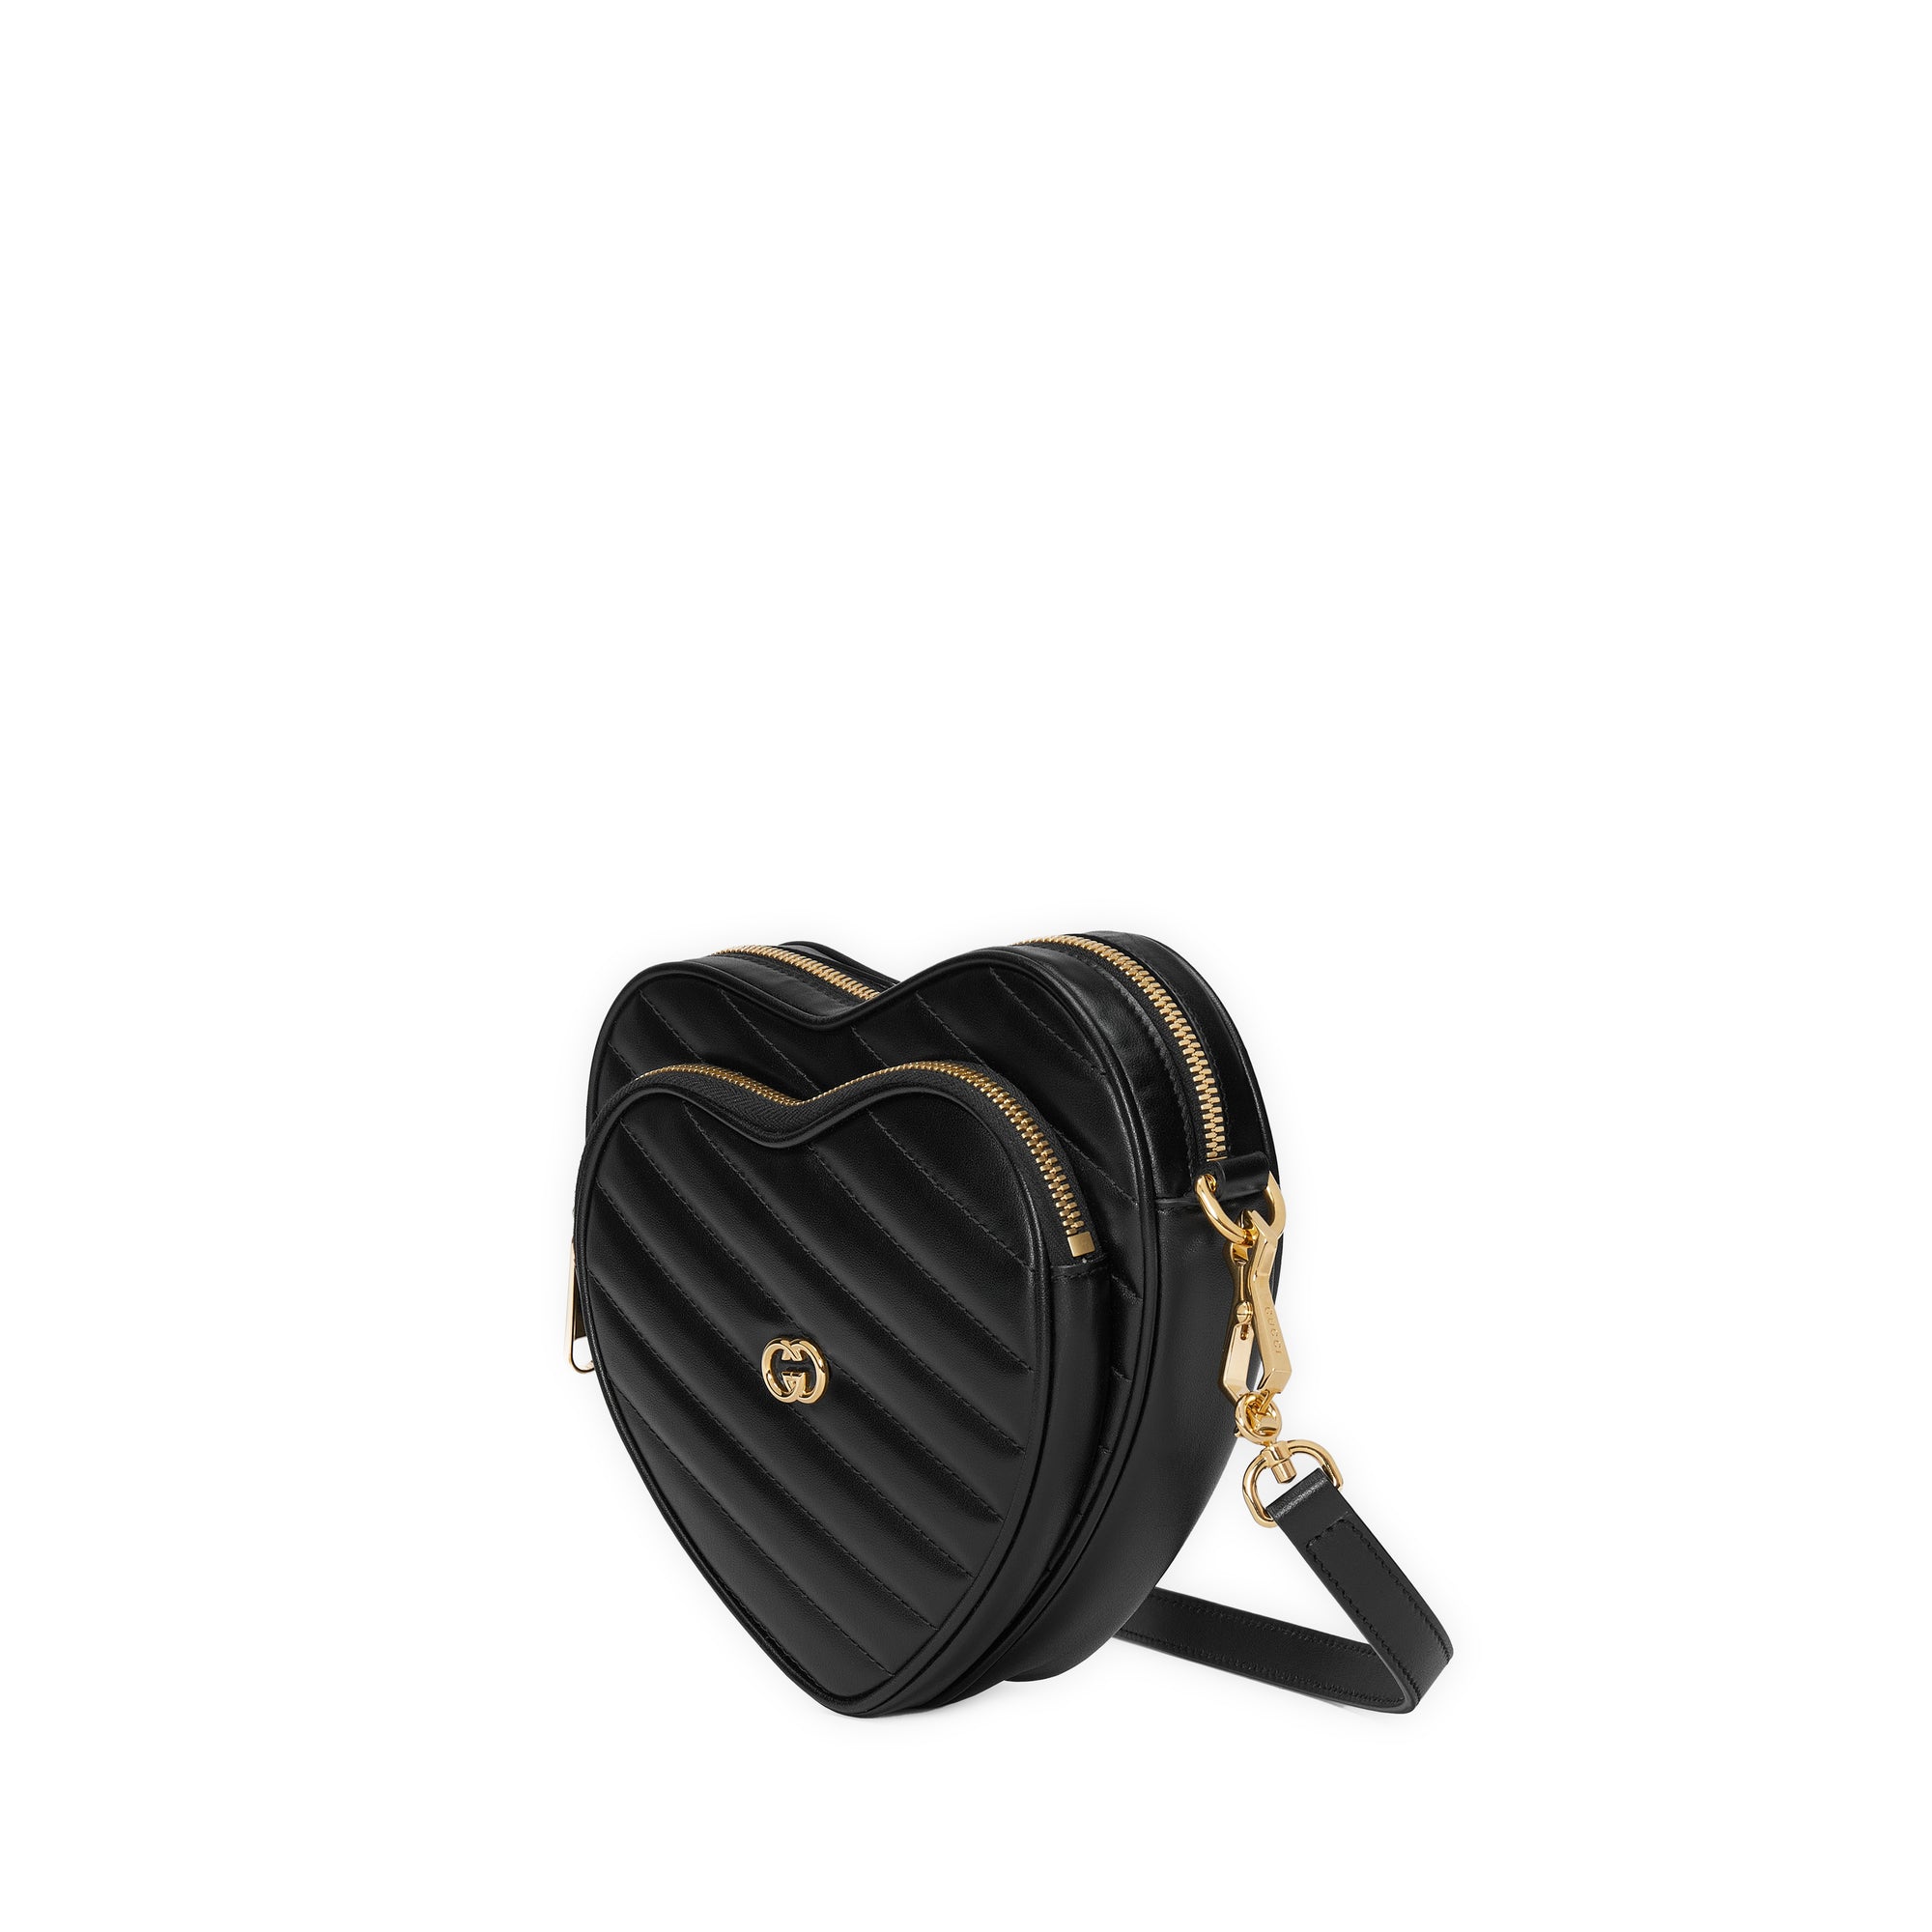 Interlocking G mini heart shoulder bag in black leather